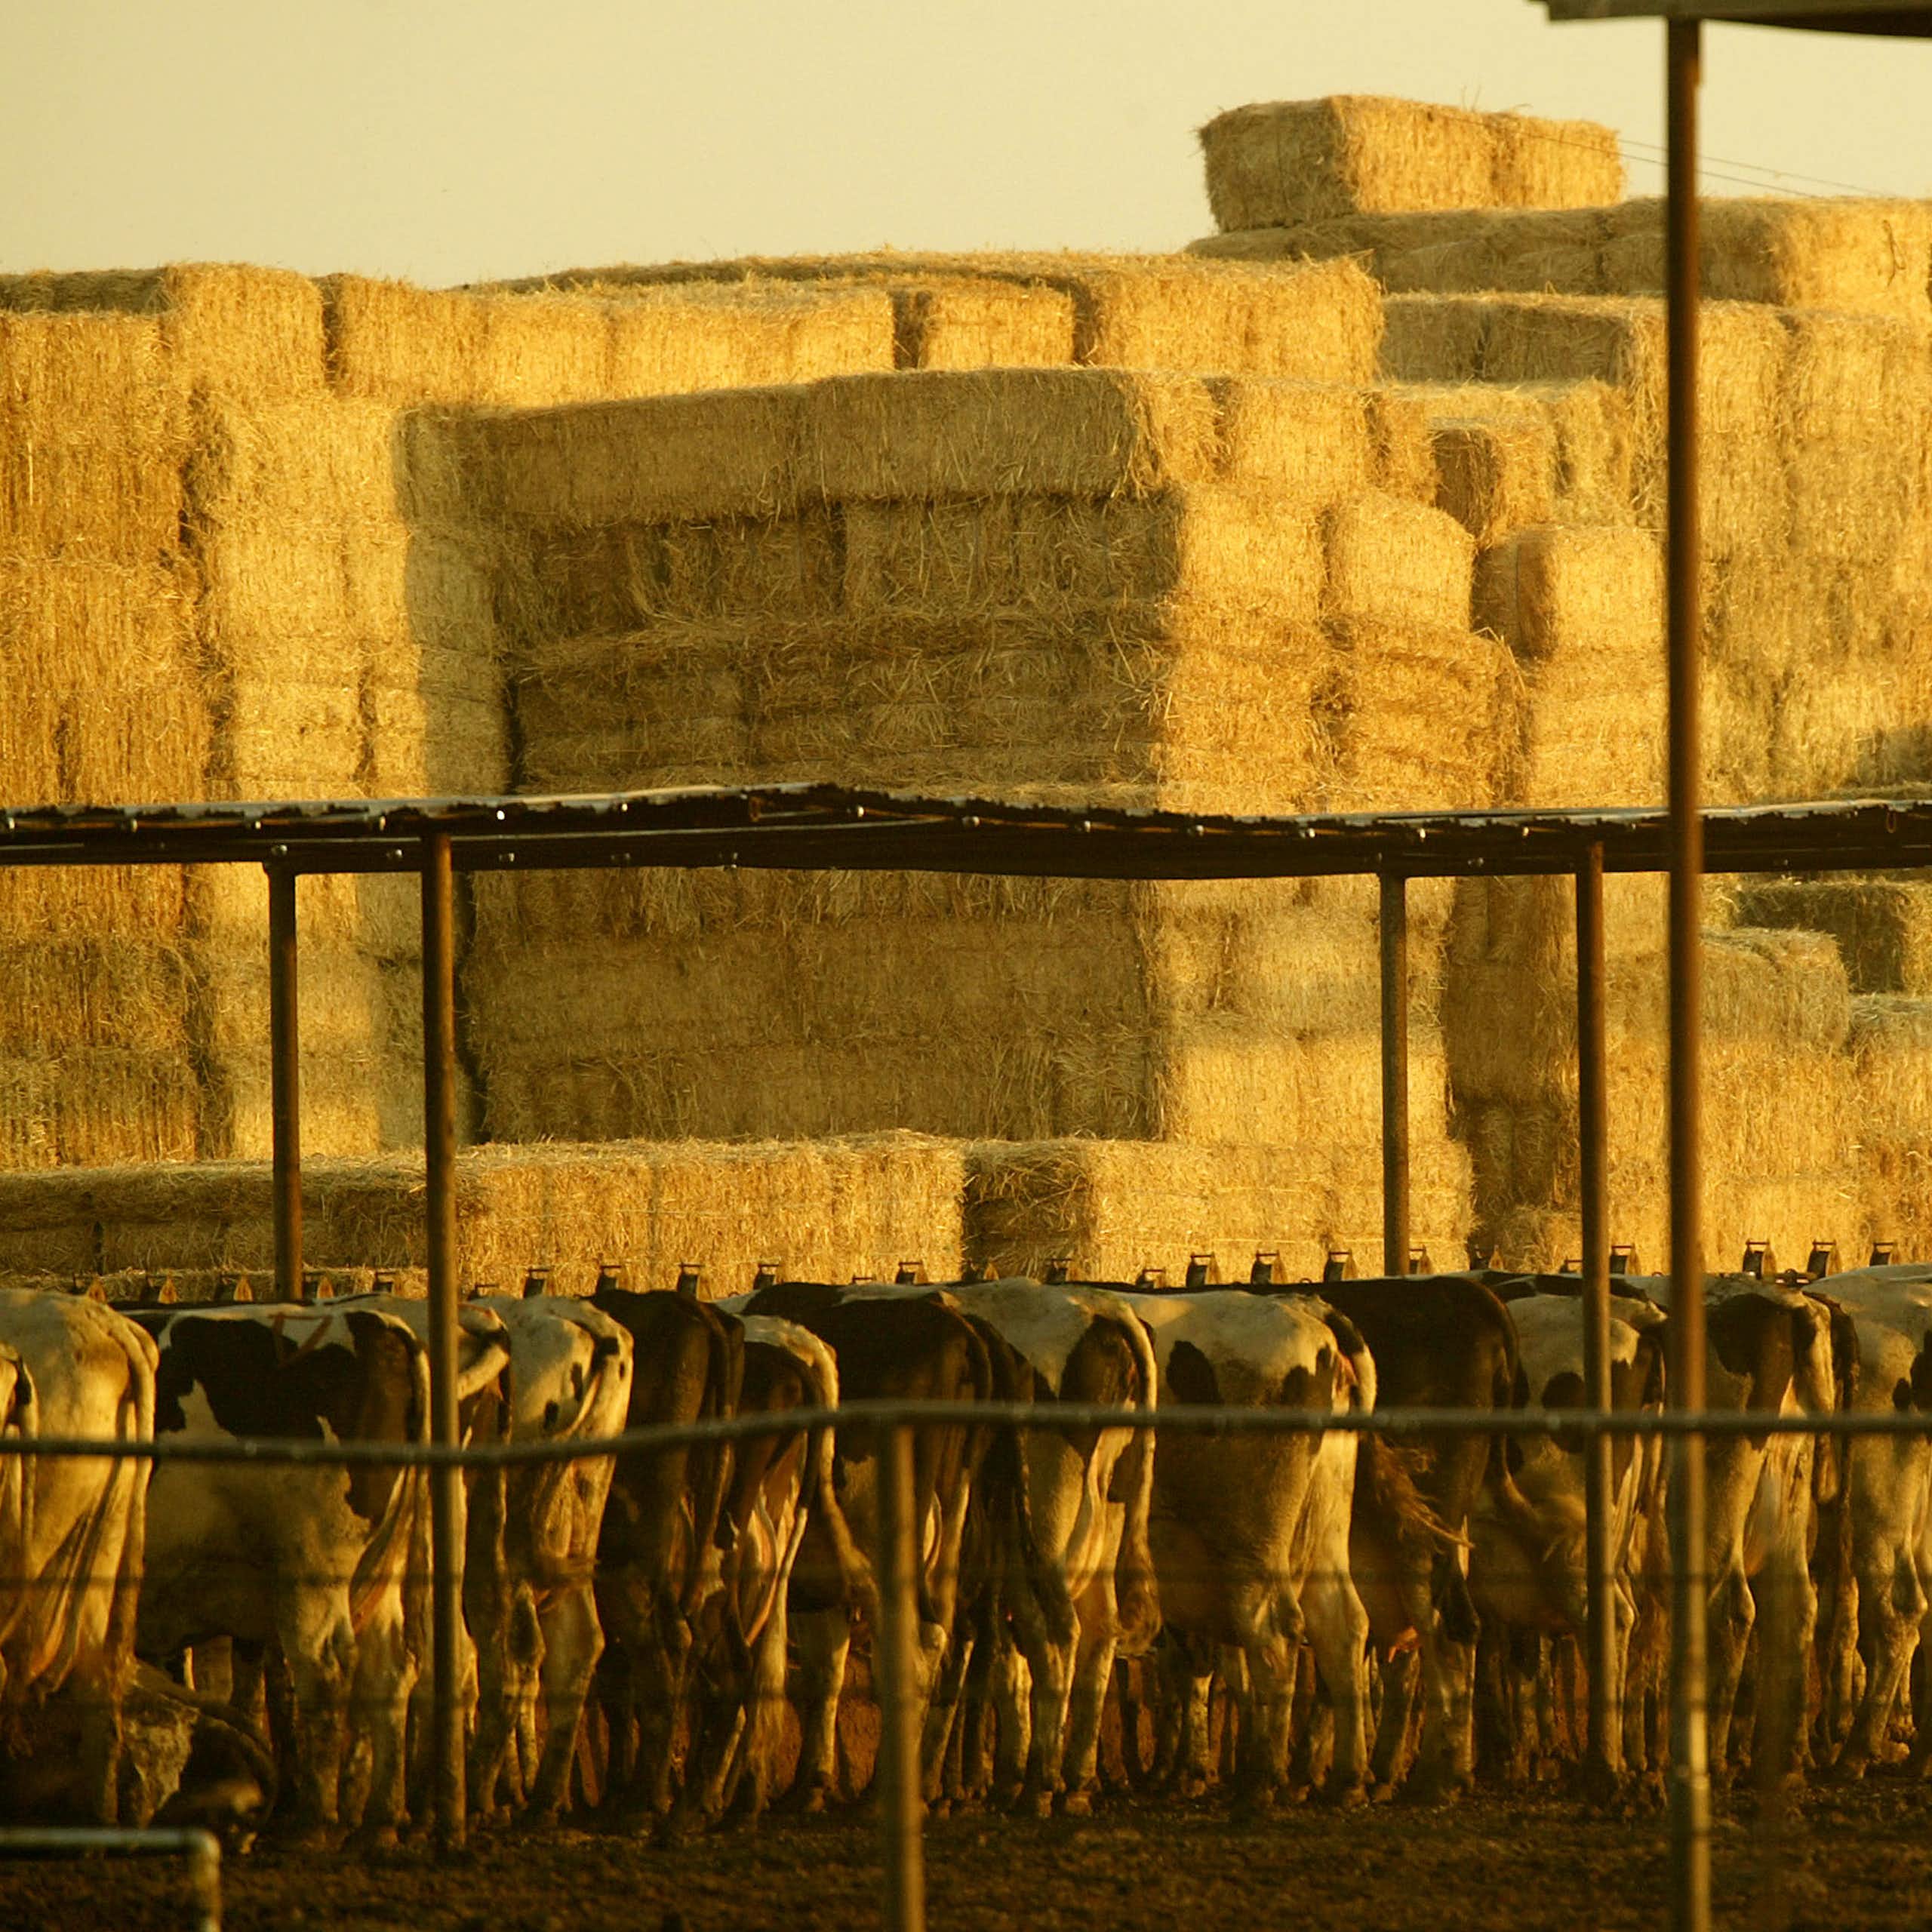 Cows feeding near piles of hay bales